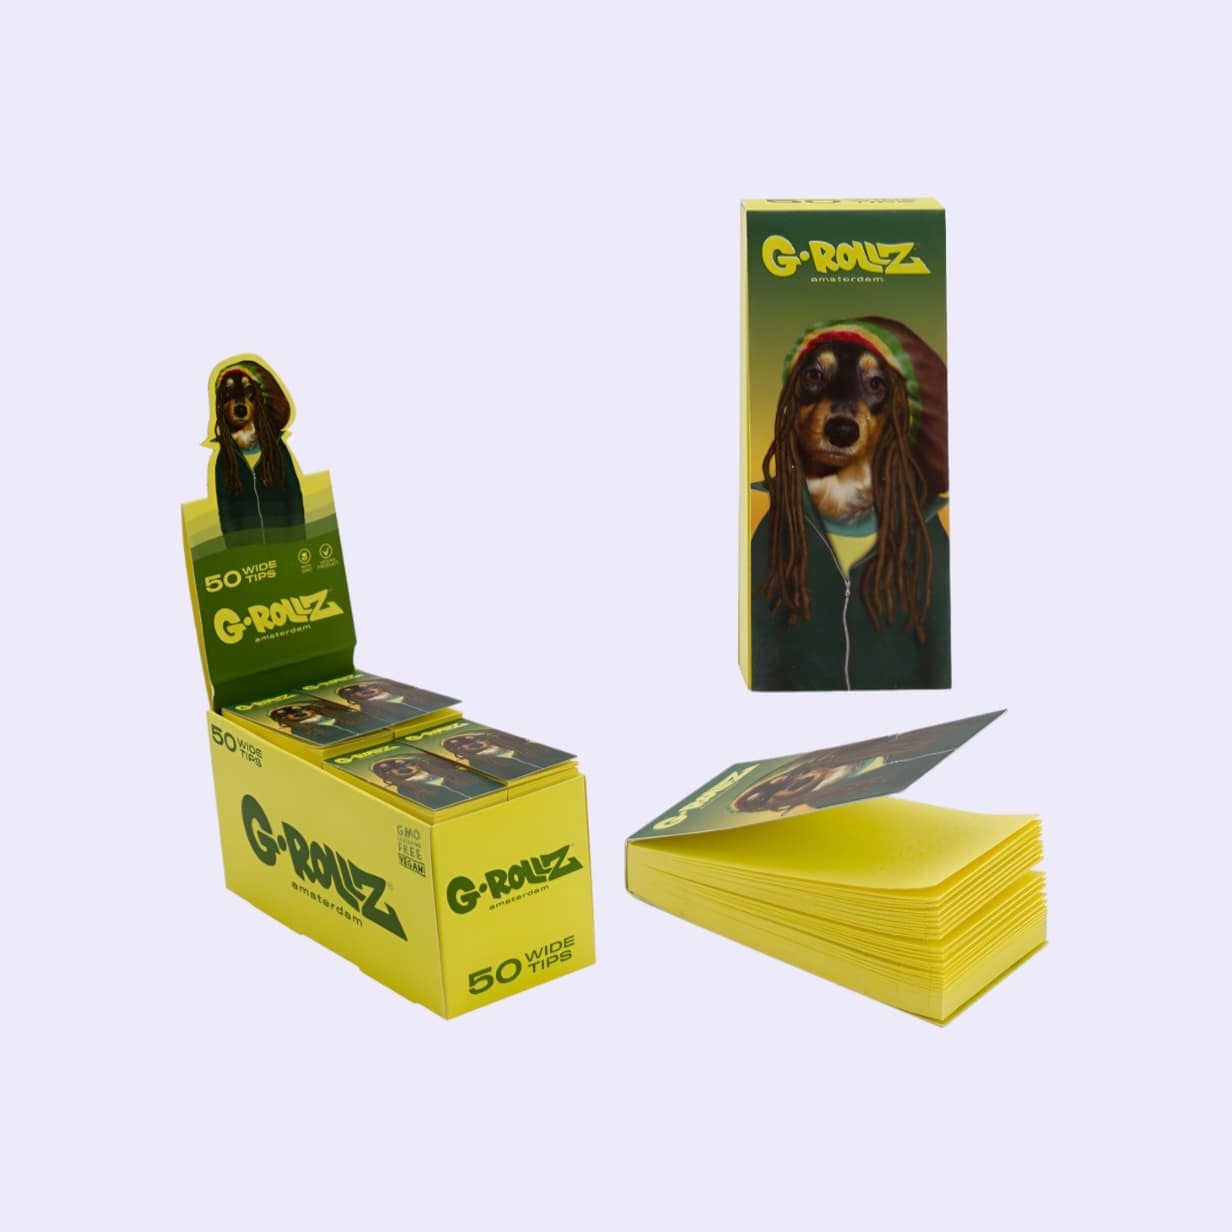 Dieses Bild zeigt die G-Rollz Pets Rock Reggae Yellow Filter Tips Display